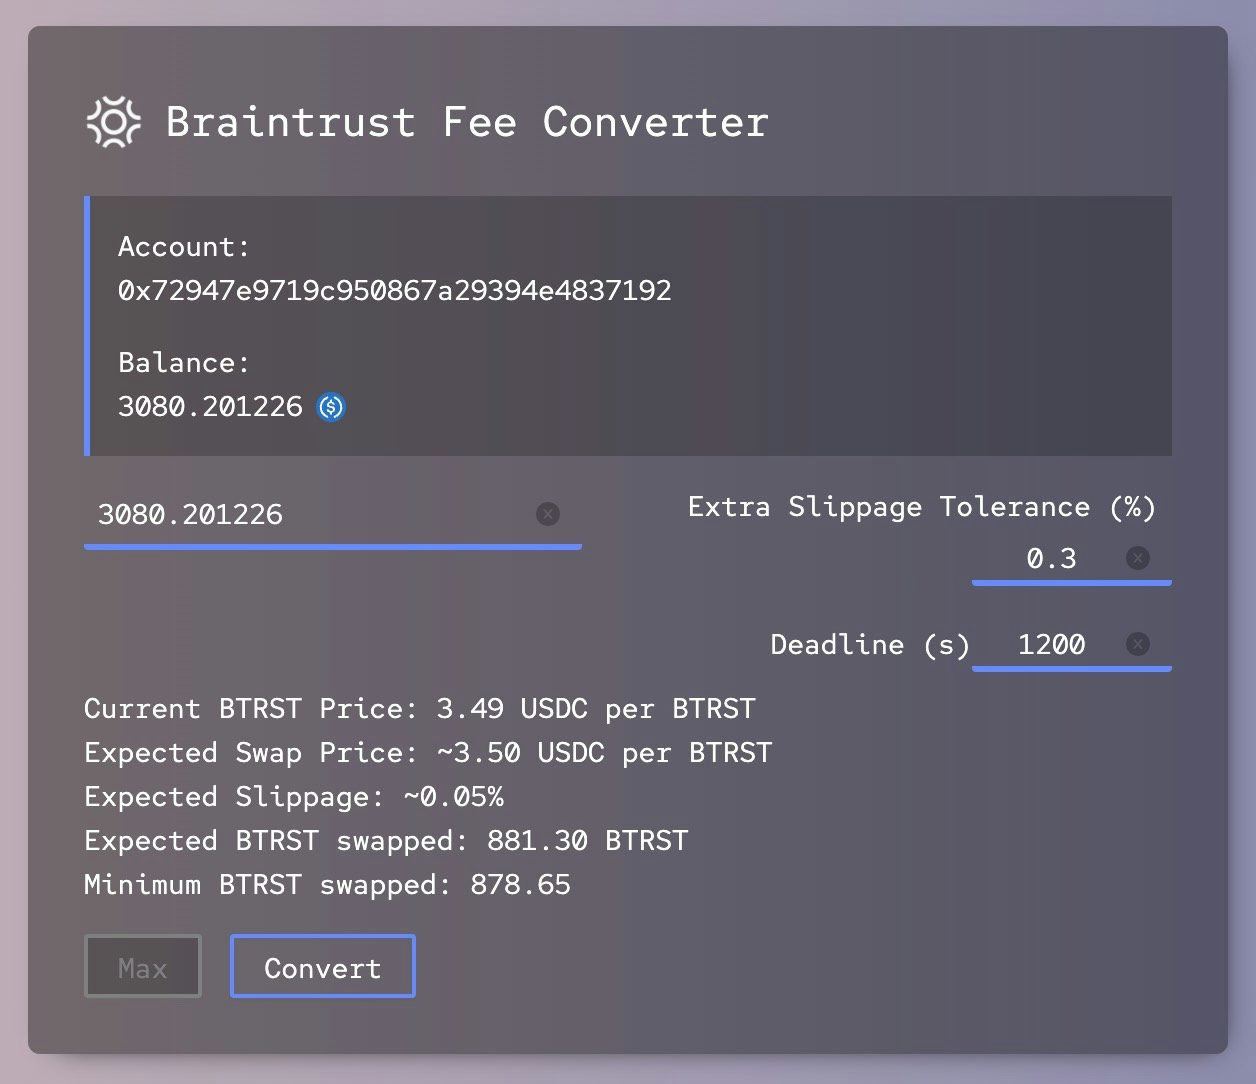 Fee Converter frontend; Source: https://medium.com/snowfork/introducing-the-braintrust-fee-converter-21be7c8af951